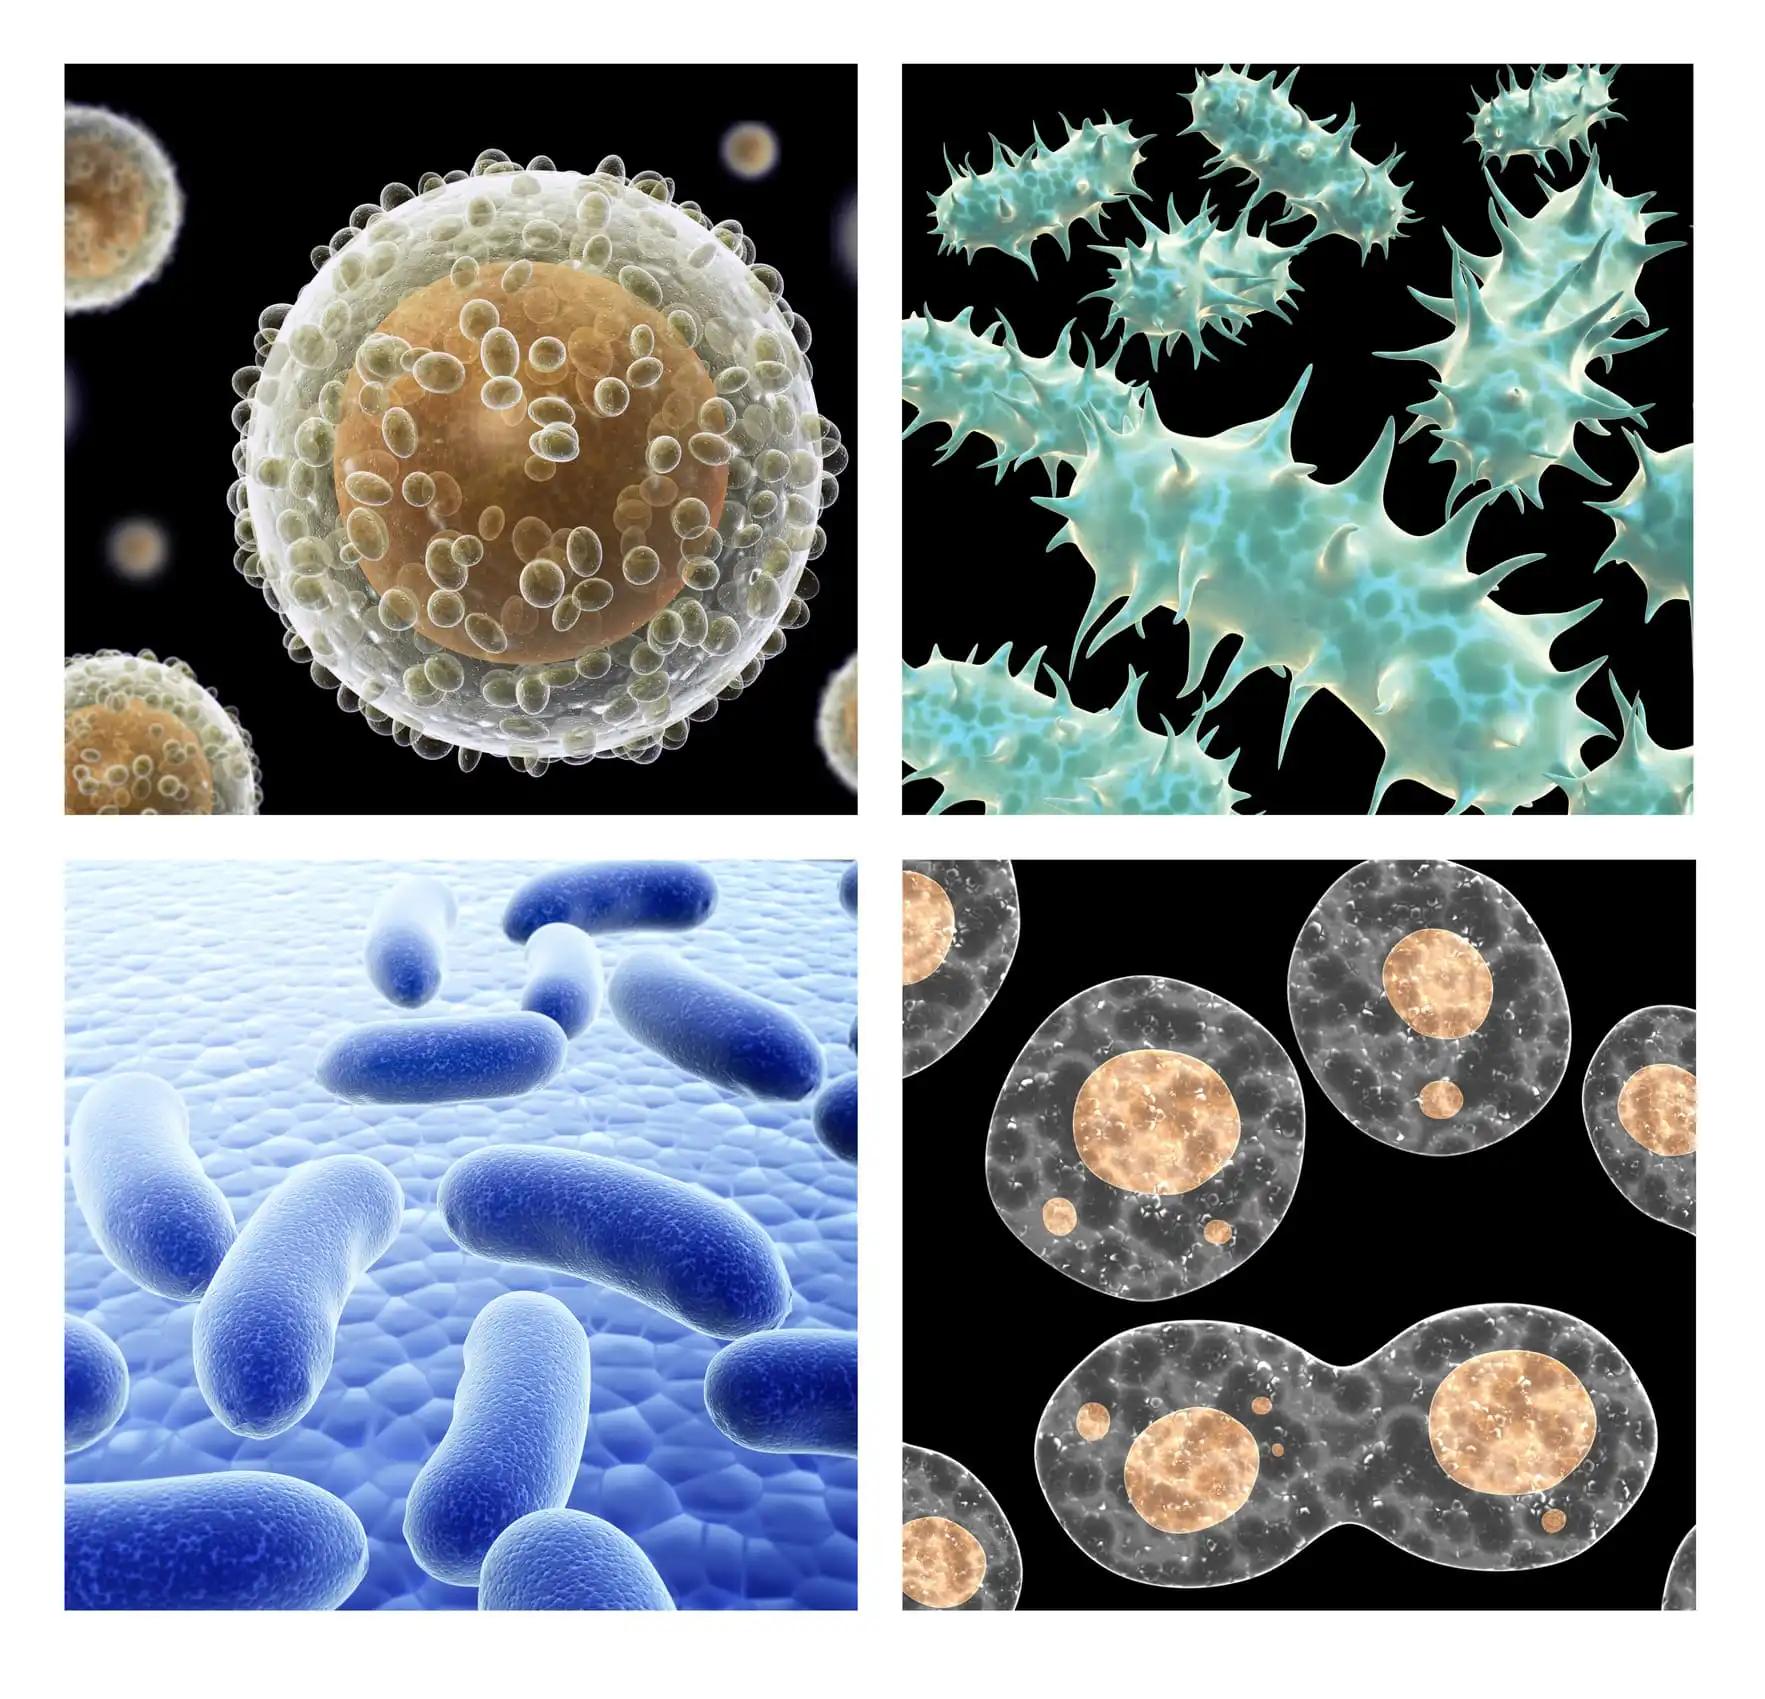 Pathogenic Bacterias and Viruses Under Microscope